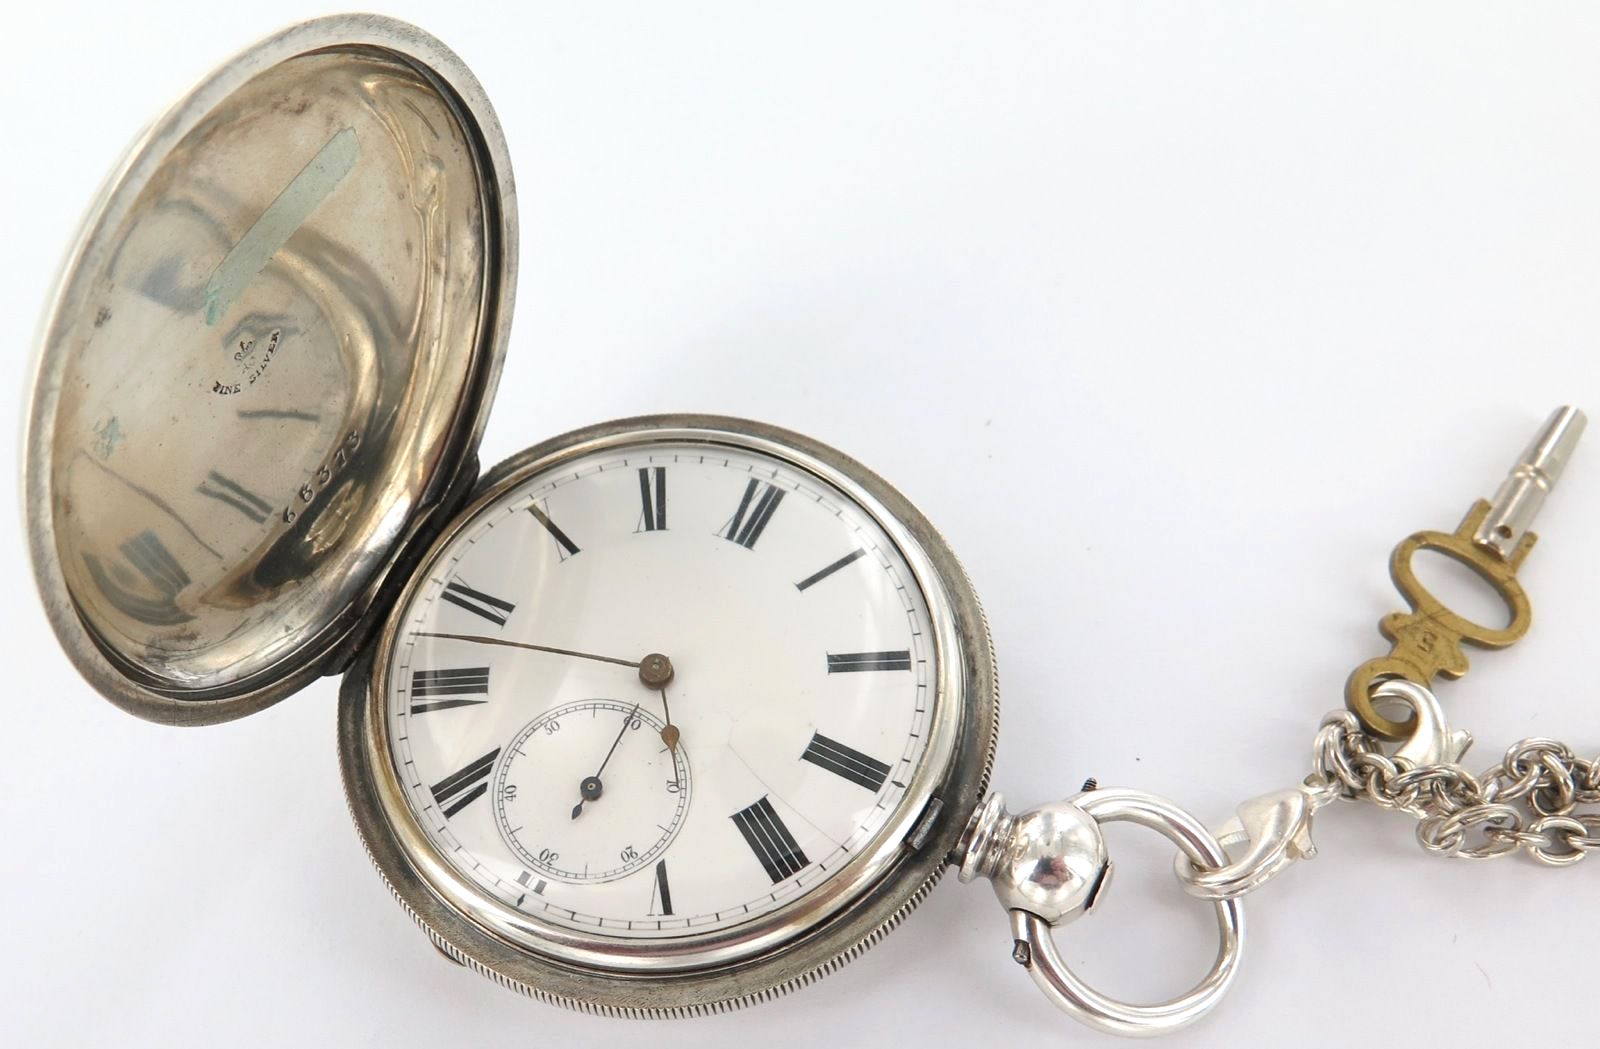 Pocket watch english harrington brisbane vintage antique